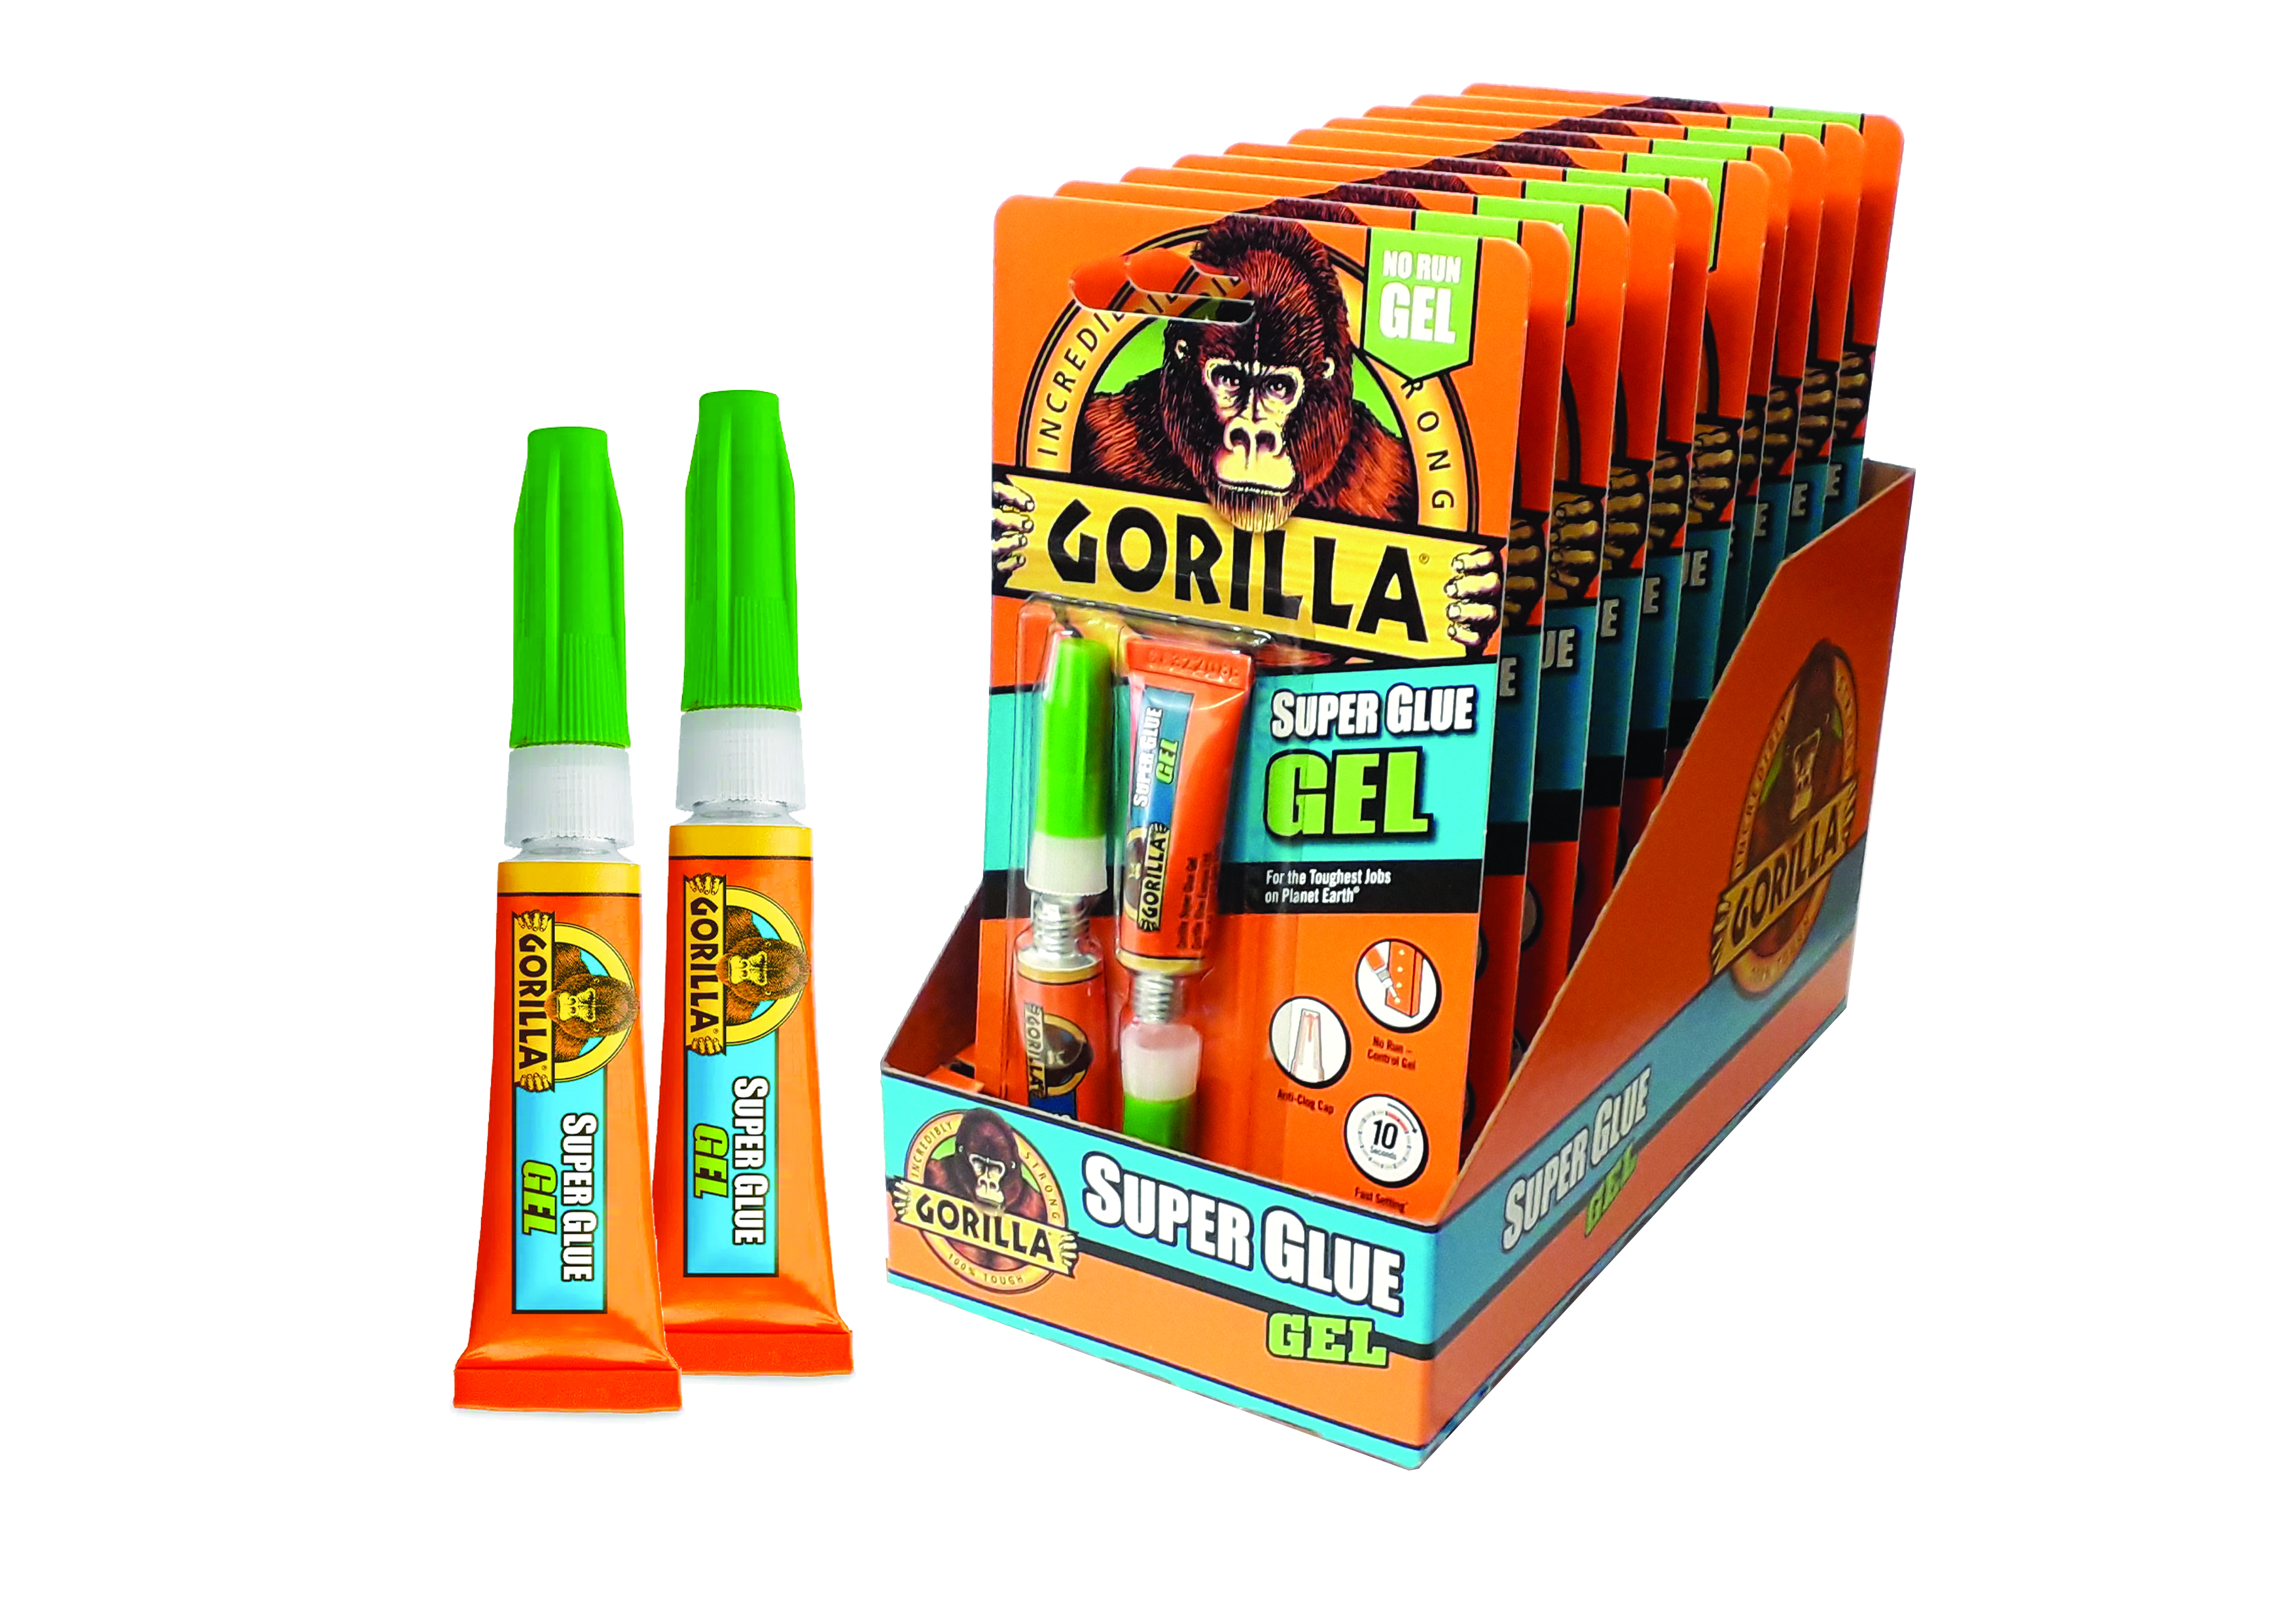 Gorilla Superglue 2 x 3g GEL  Display Pack 10